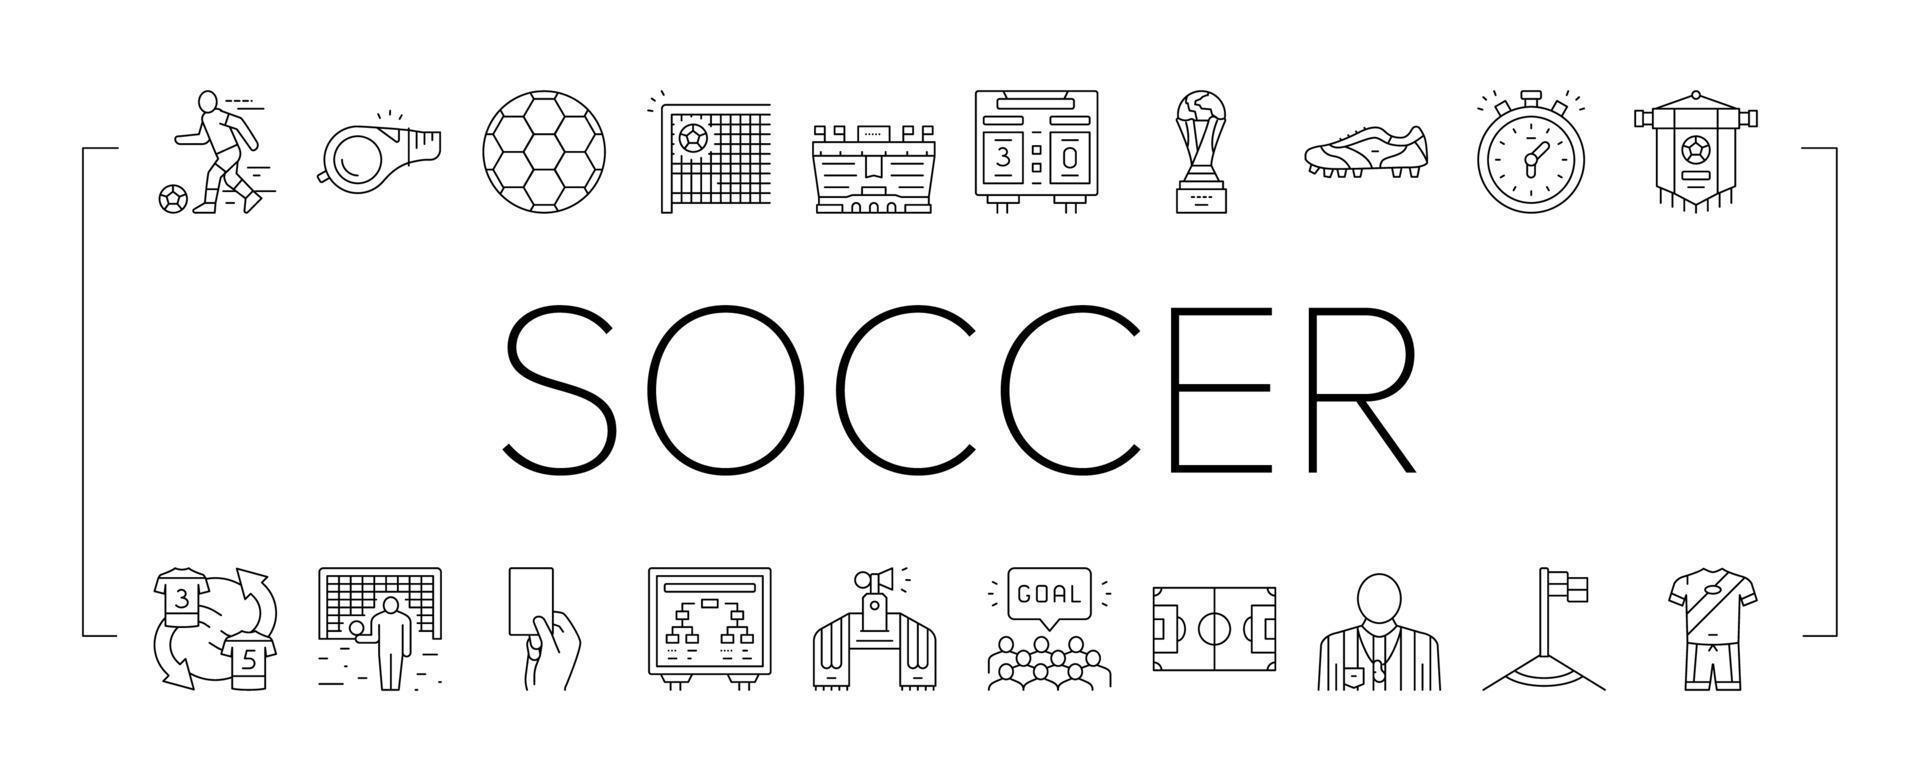 Soccer Team Sport Game On Stadium Icons Set Vector